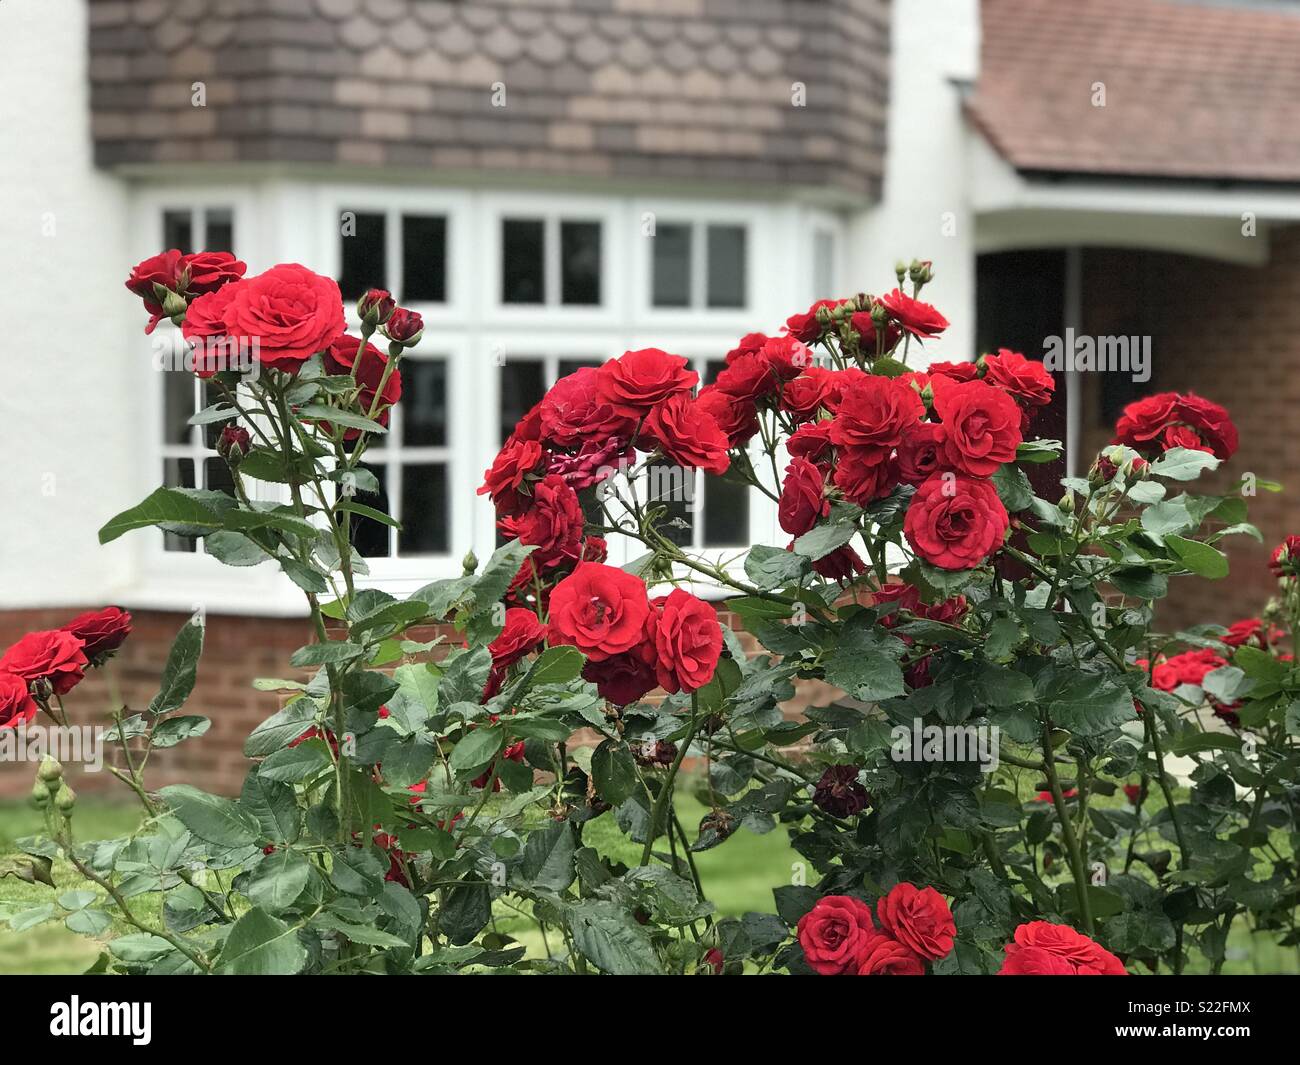 Siepe di rose sul giardino anteriore Foto stock - Alamy